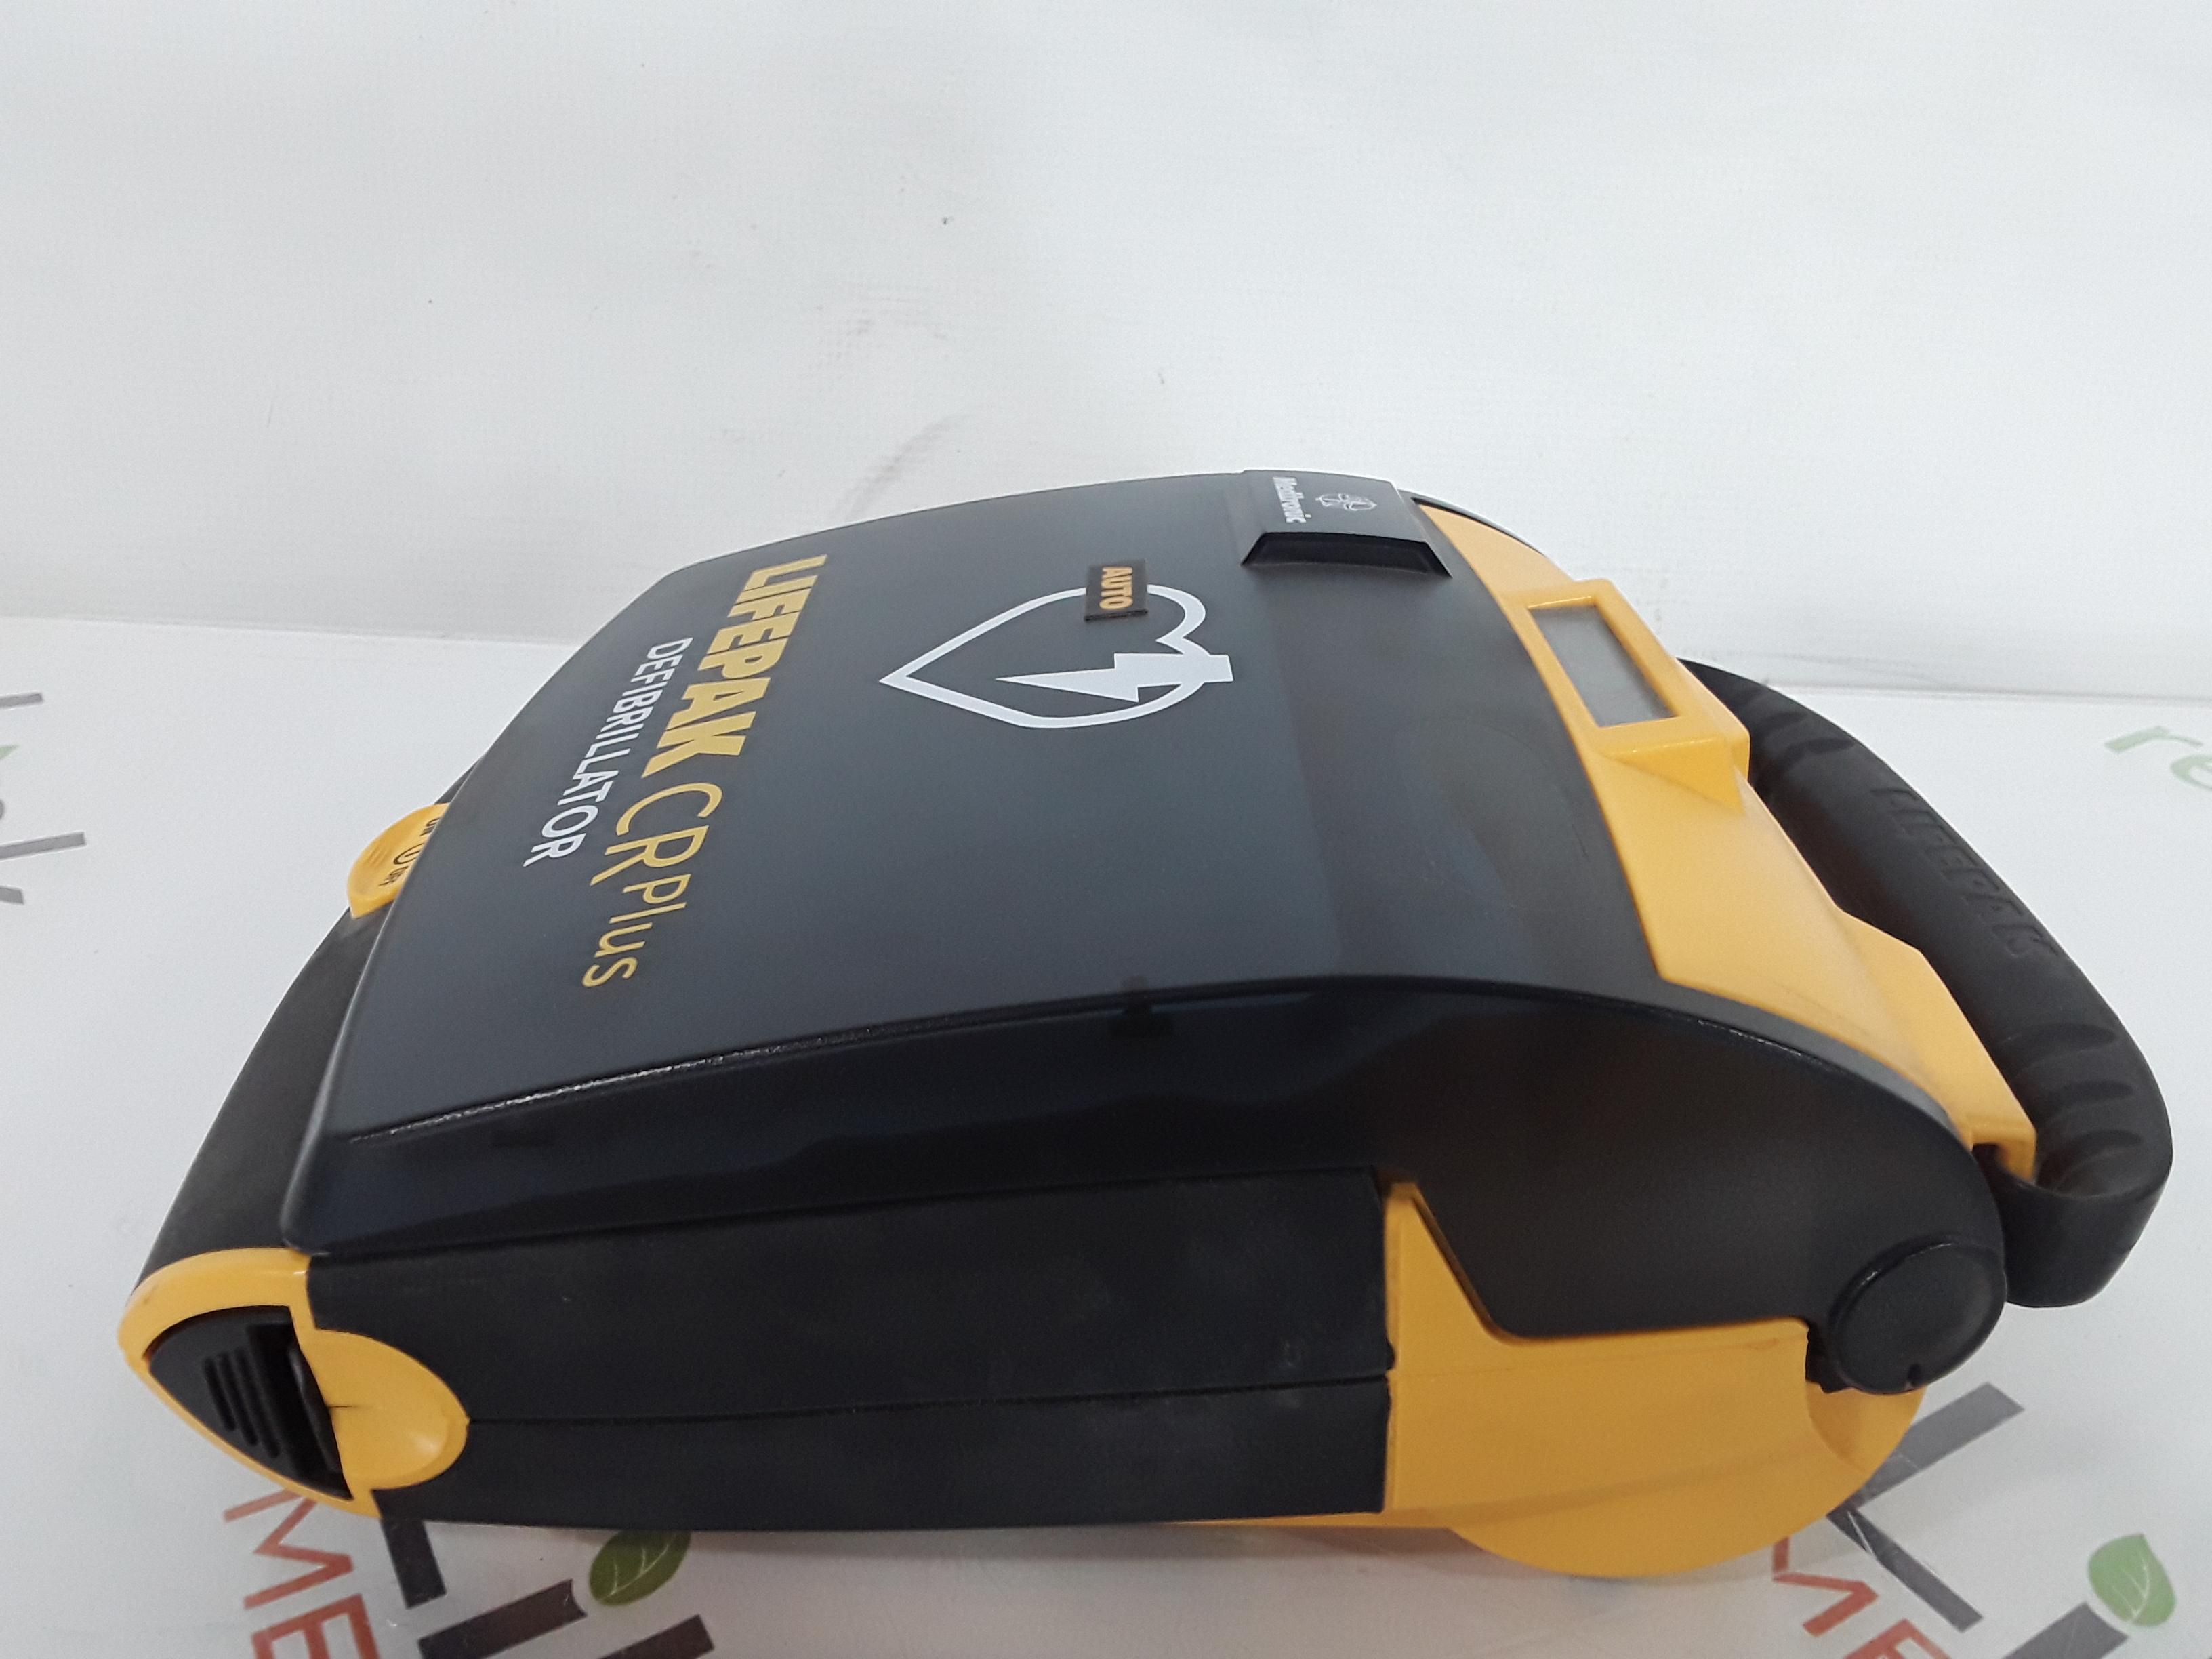 Medtronic LifePak CR Plus Defibrillator - 388742